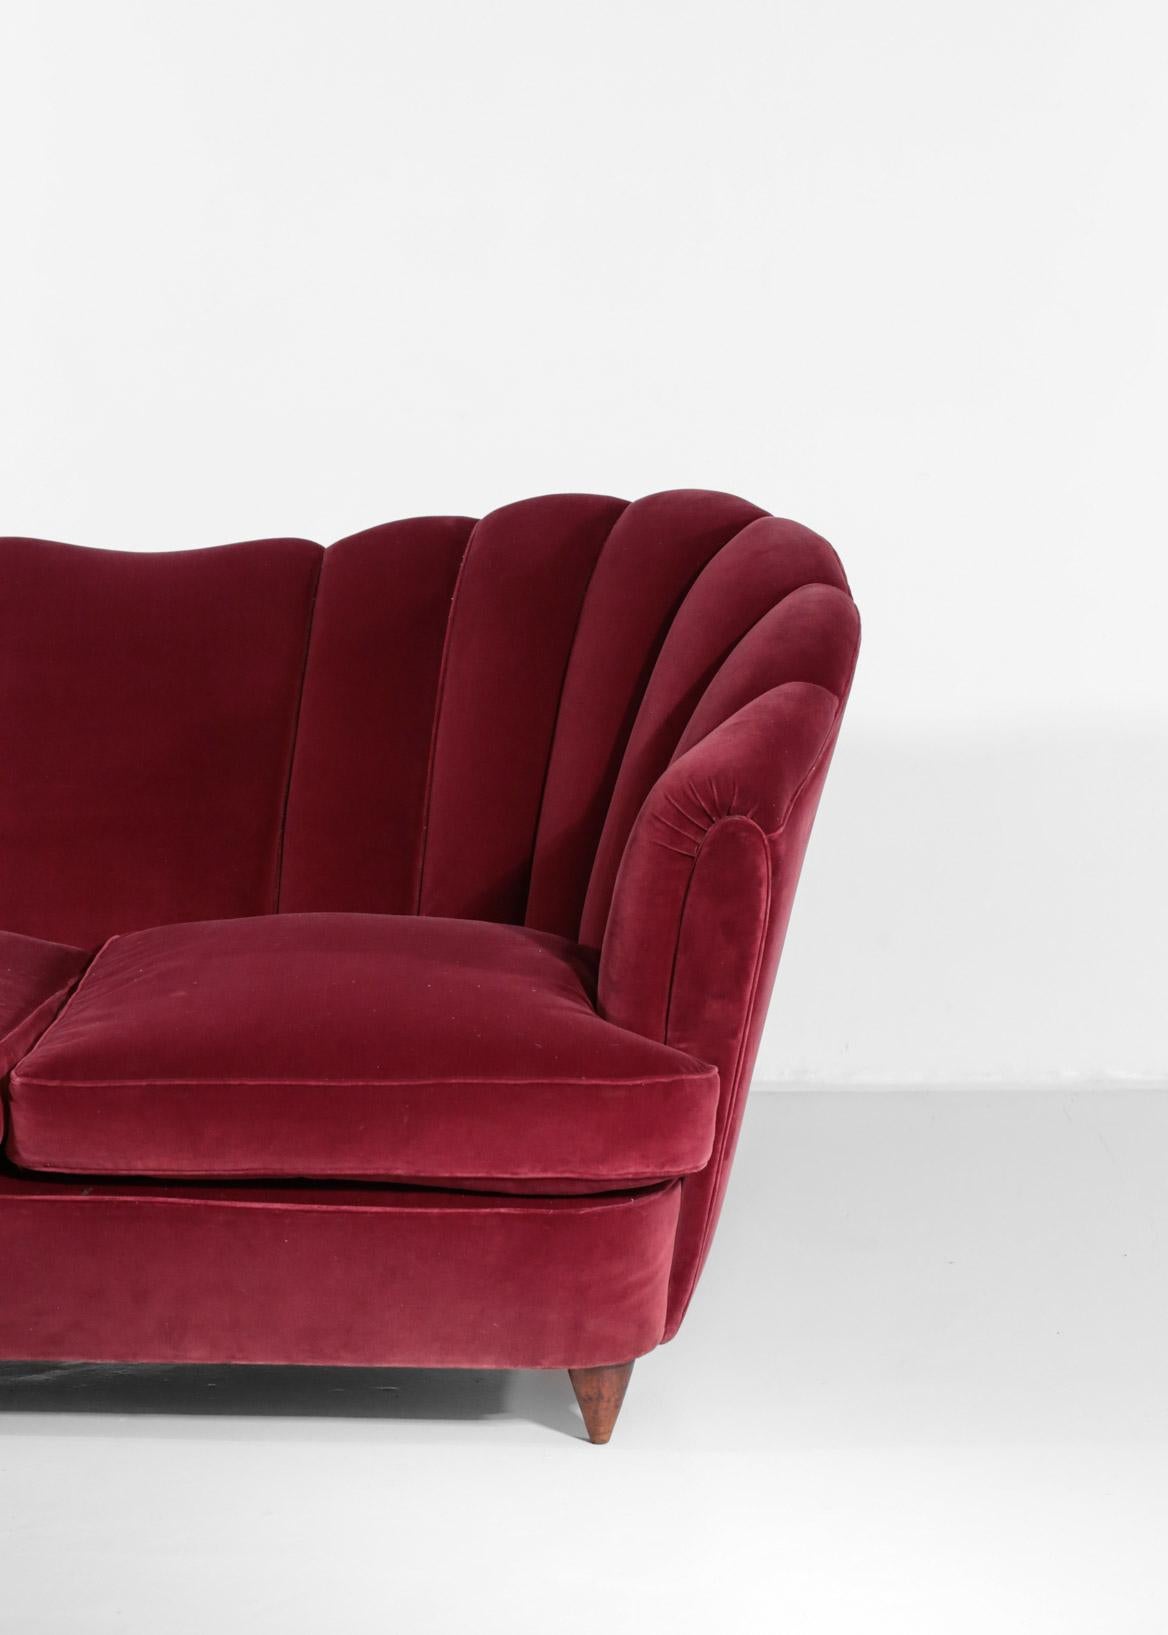 Mid-20th Century Italian Sofa Gio Ponti Style 1960s Burgundy Velvet For Sale